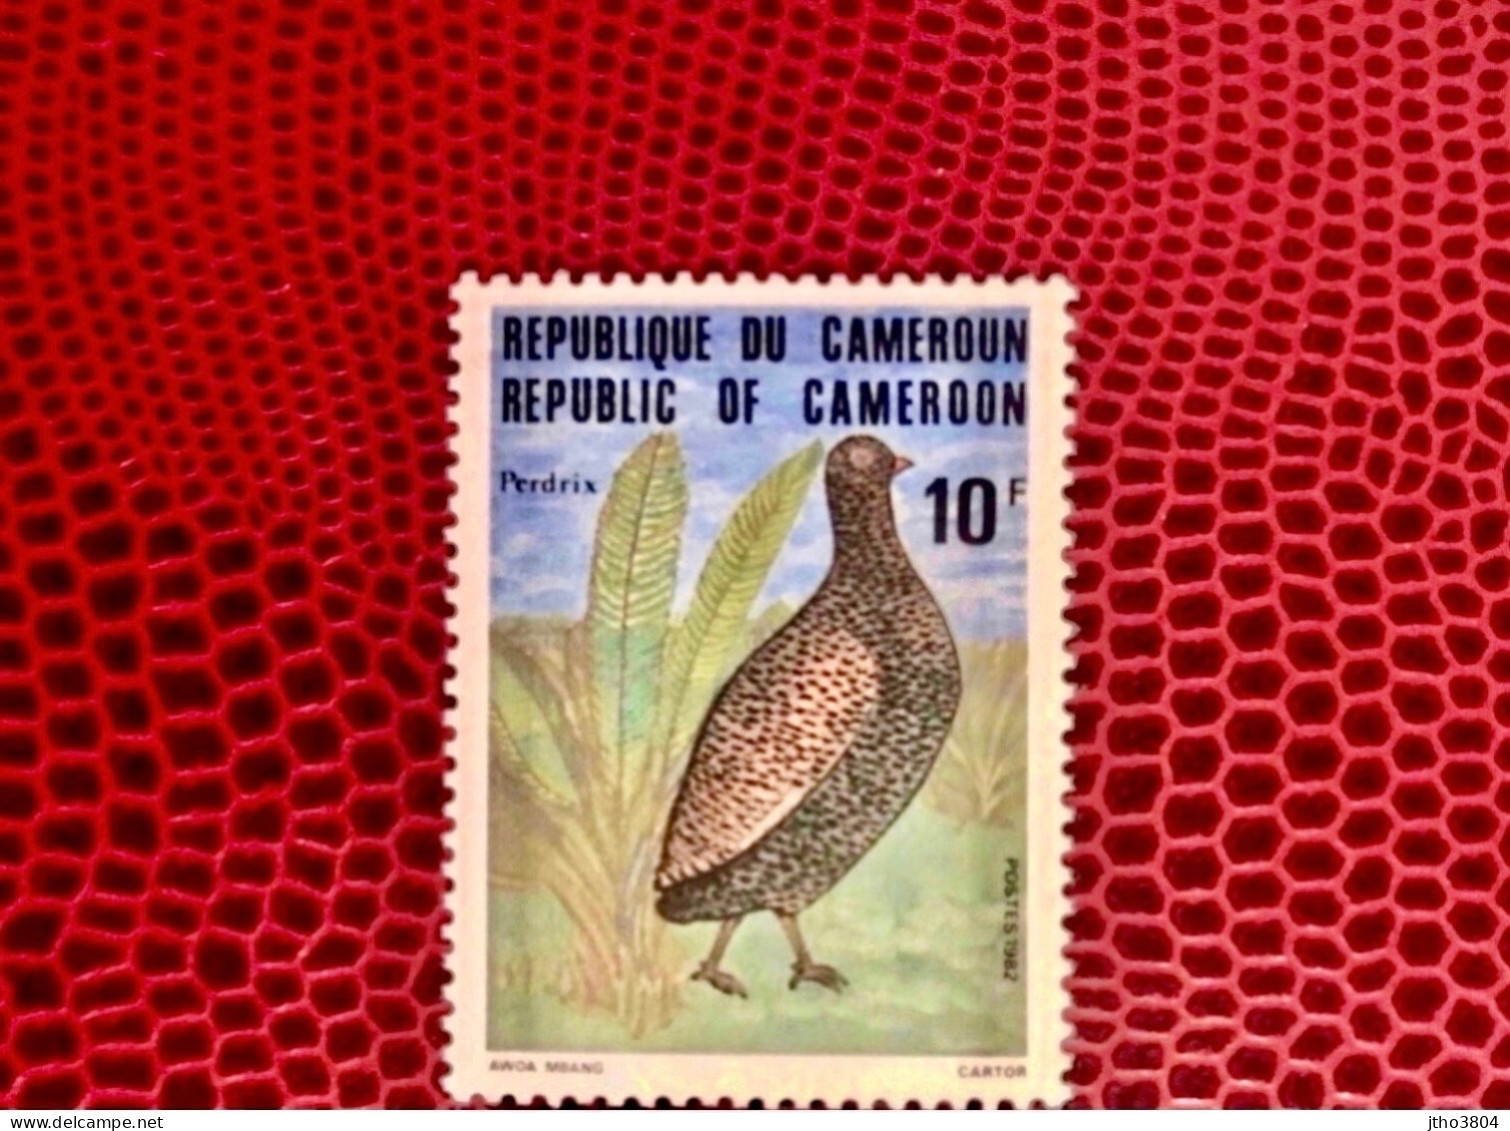 CAMEROUN 1982 1v Neuf ** MNH Mi 985 Variété Manque Unie Ucello Oiseau Bird Pájaro Vogel CAMEROON - Hühnervögel & Fasanen